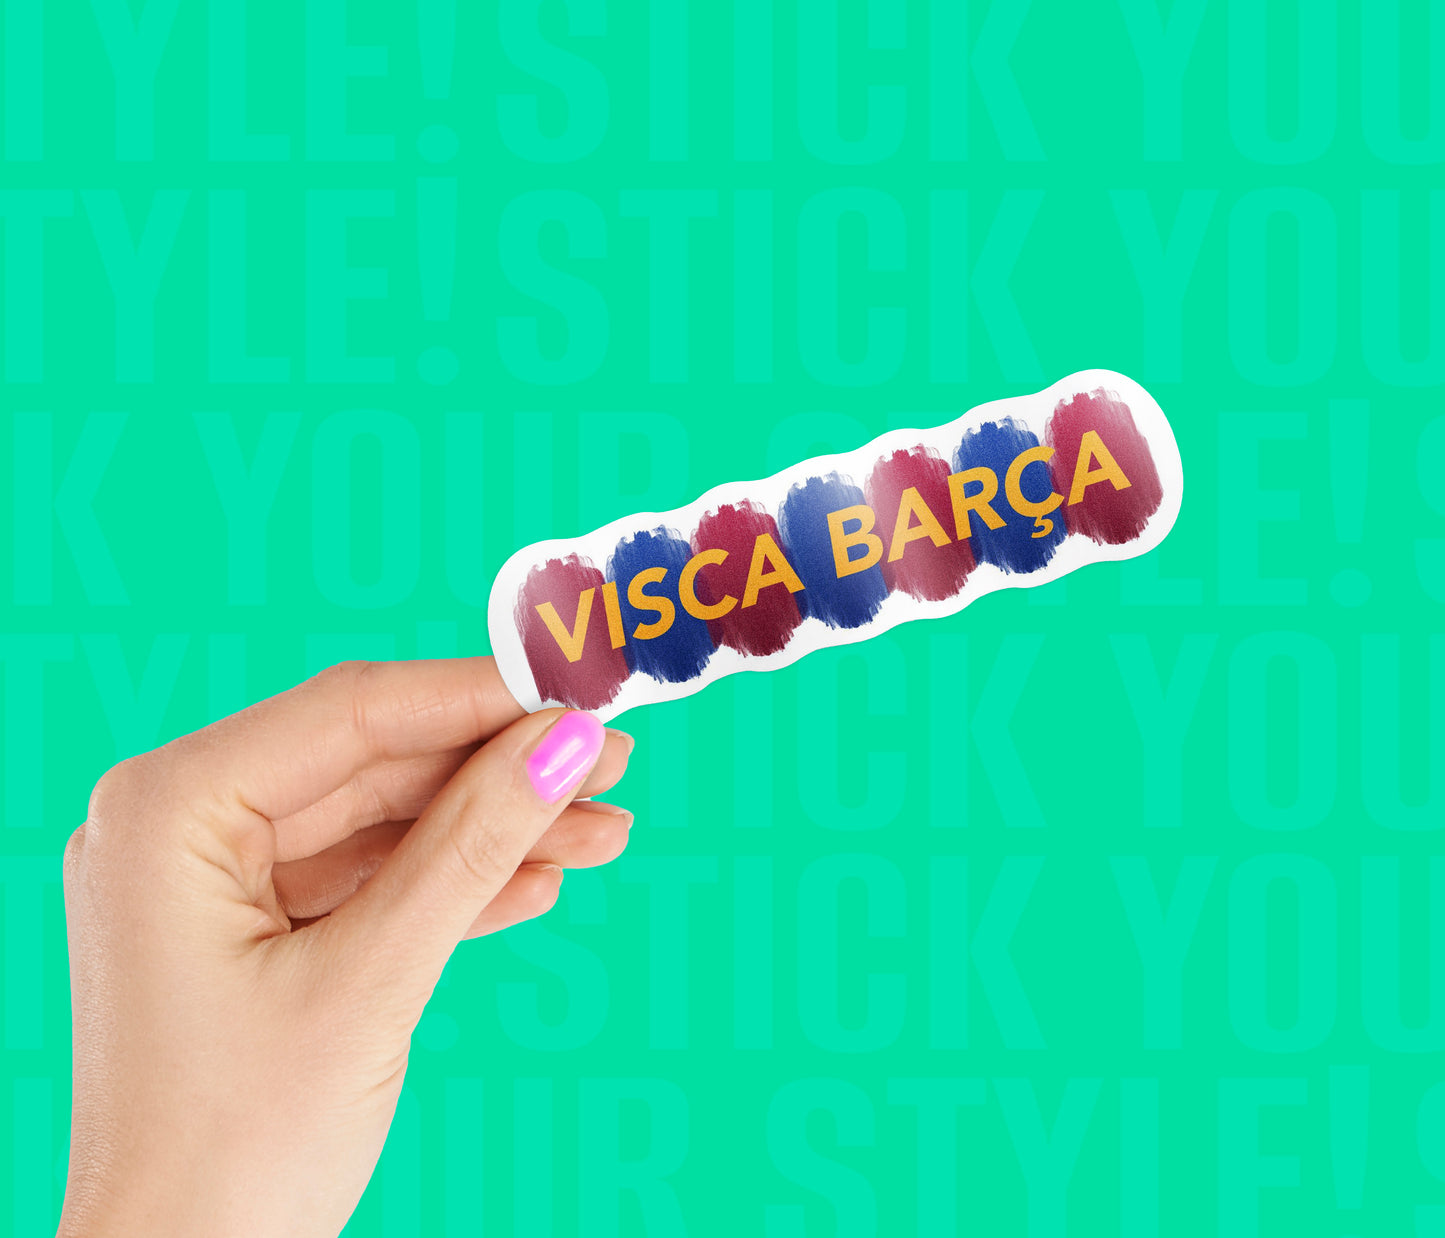 Visca Barca Sticker